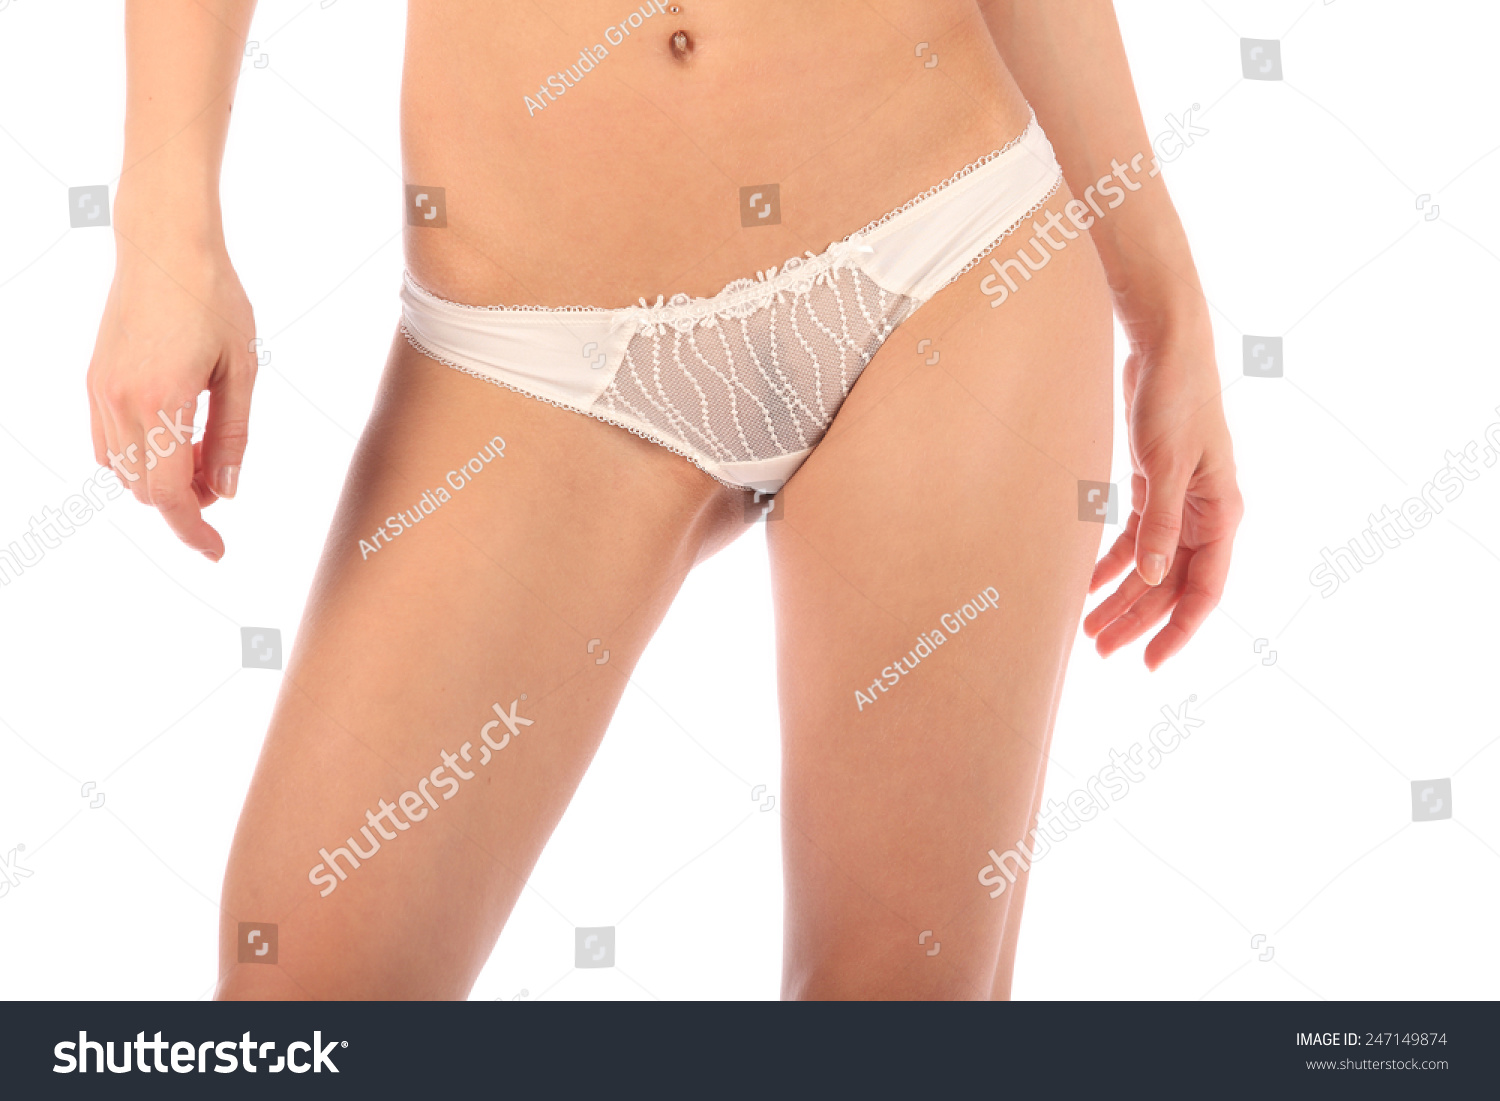 A beautiful white ass in white thong panties